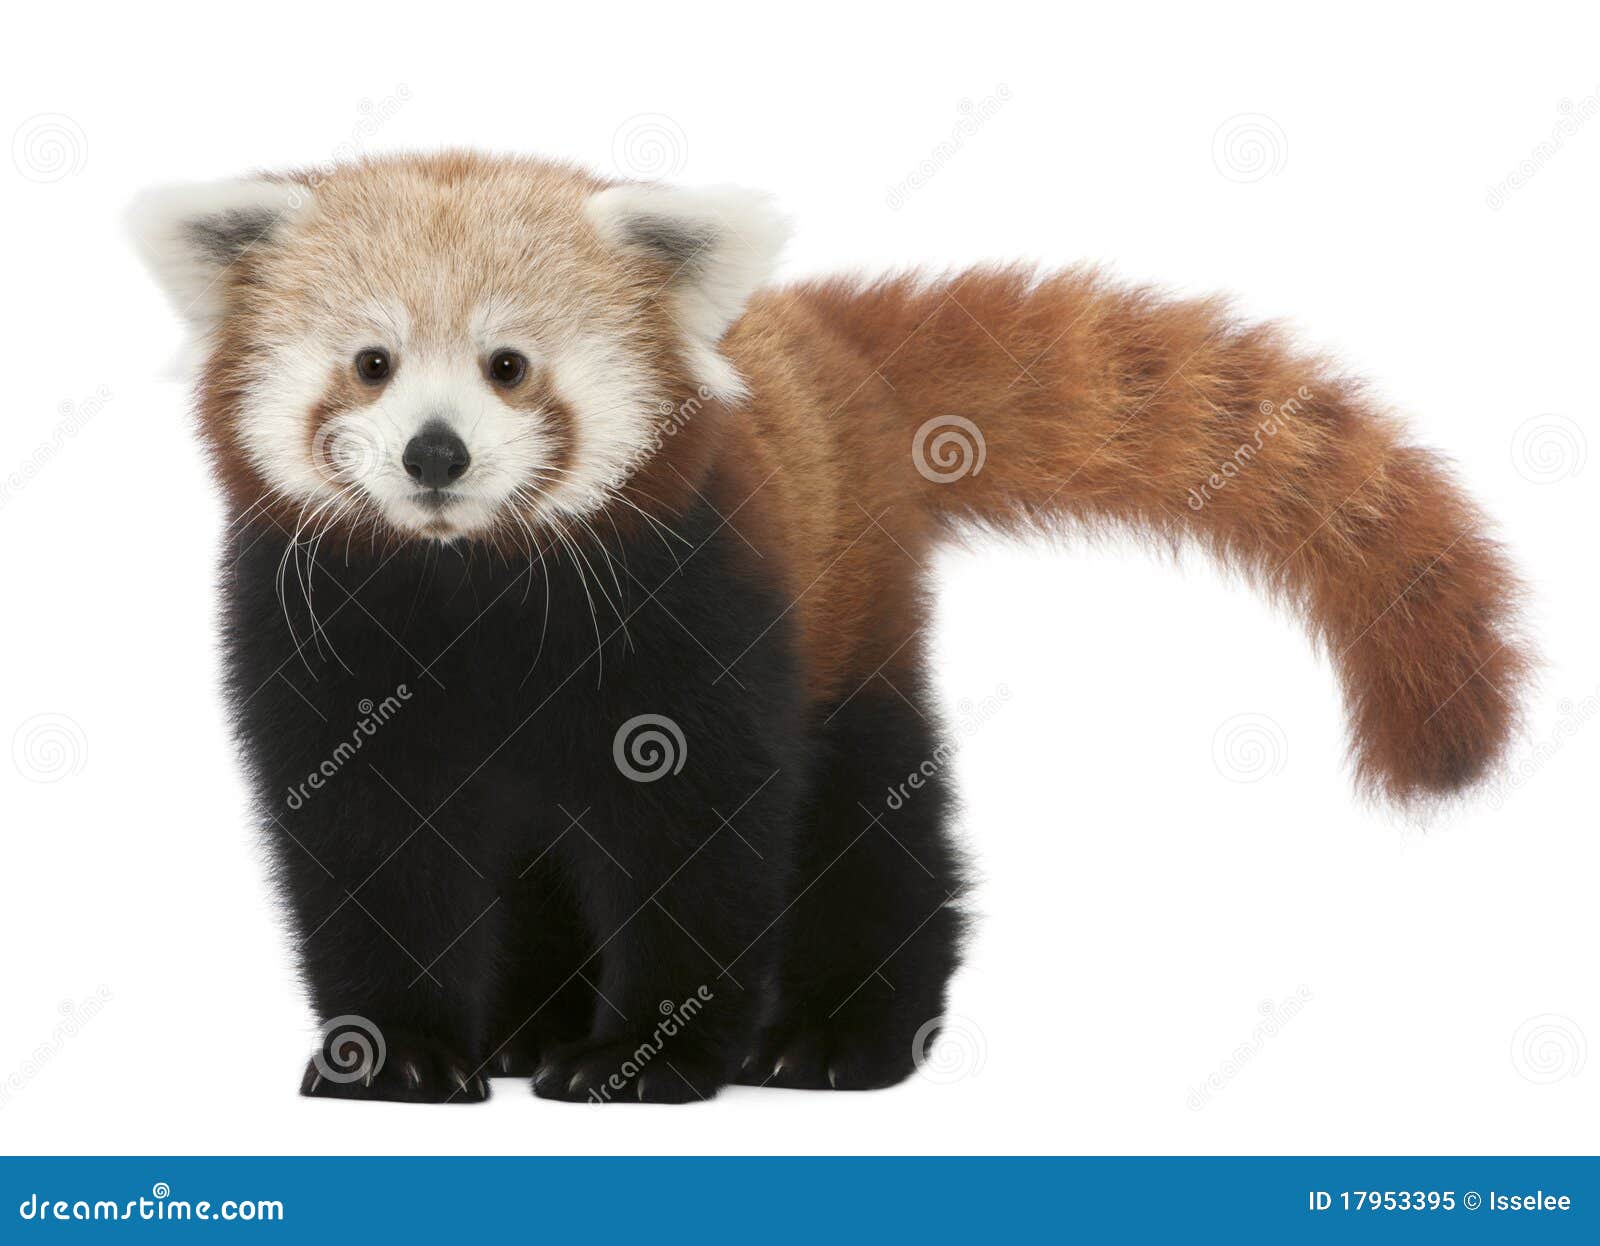 young red panda or shining cat, ailurus fulgens